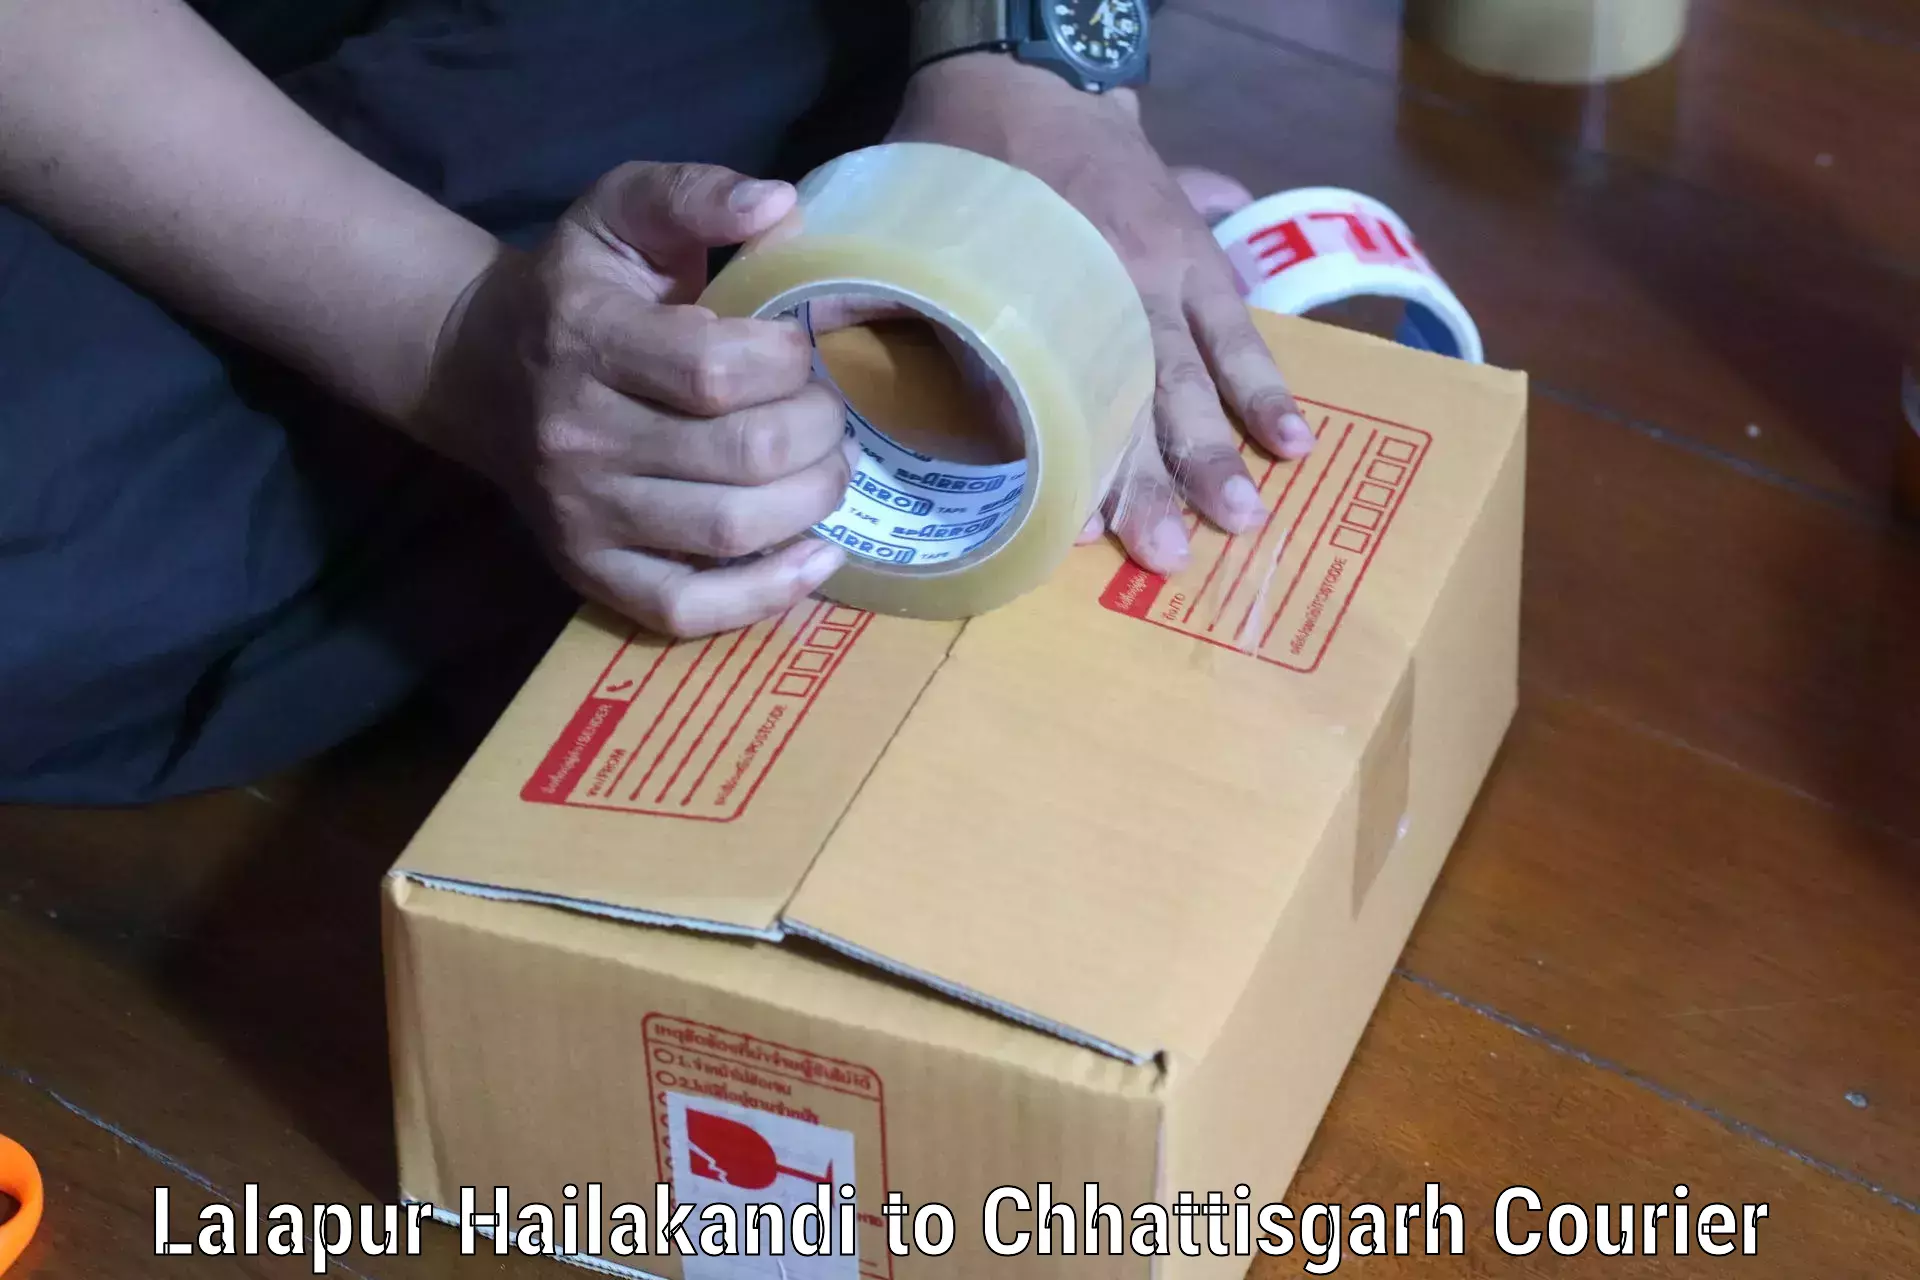 Courier service partnerships Lalapur Hailakandi to Patna Chhattisgarh